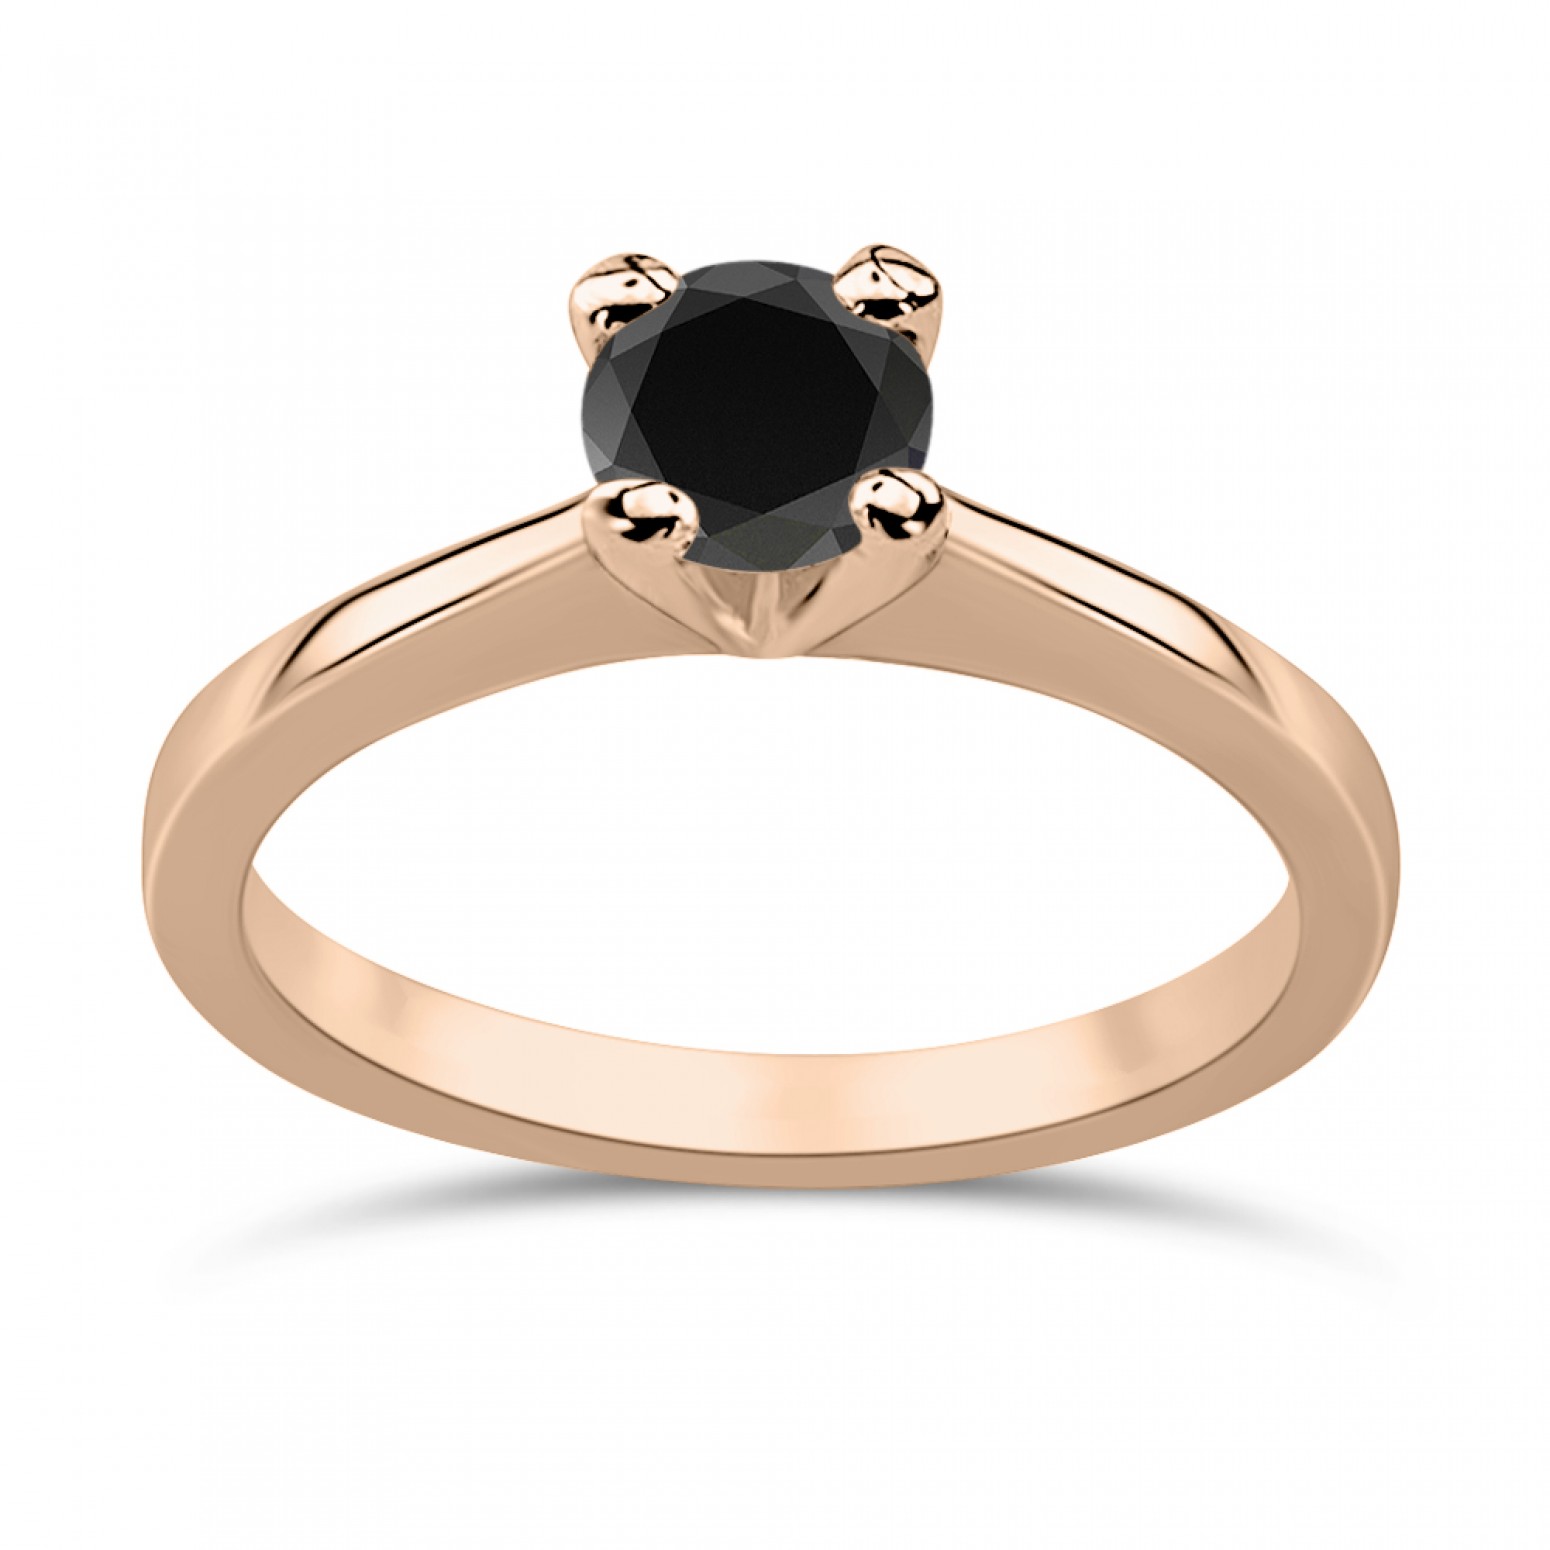 Solitaire ring 14K pink gold with black zircon, da3665 ENGAGEMENT RINGS Κοσμηματα - chrilia.gr